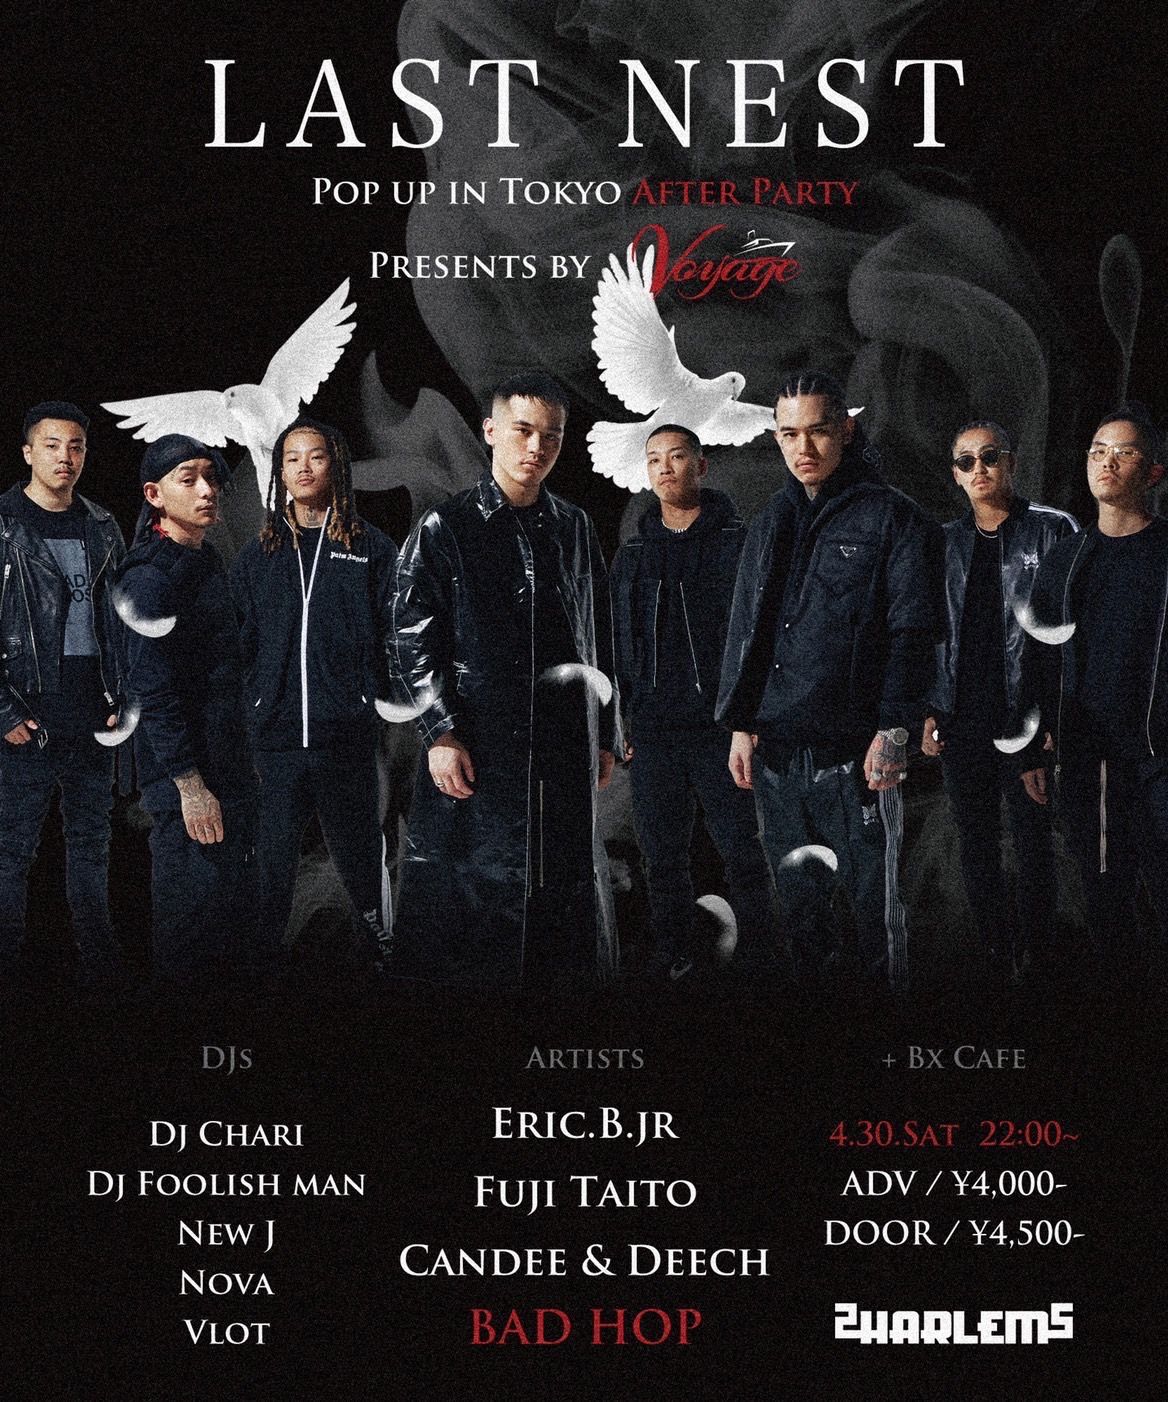 Last nest